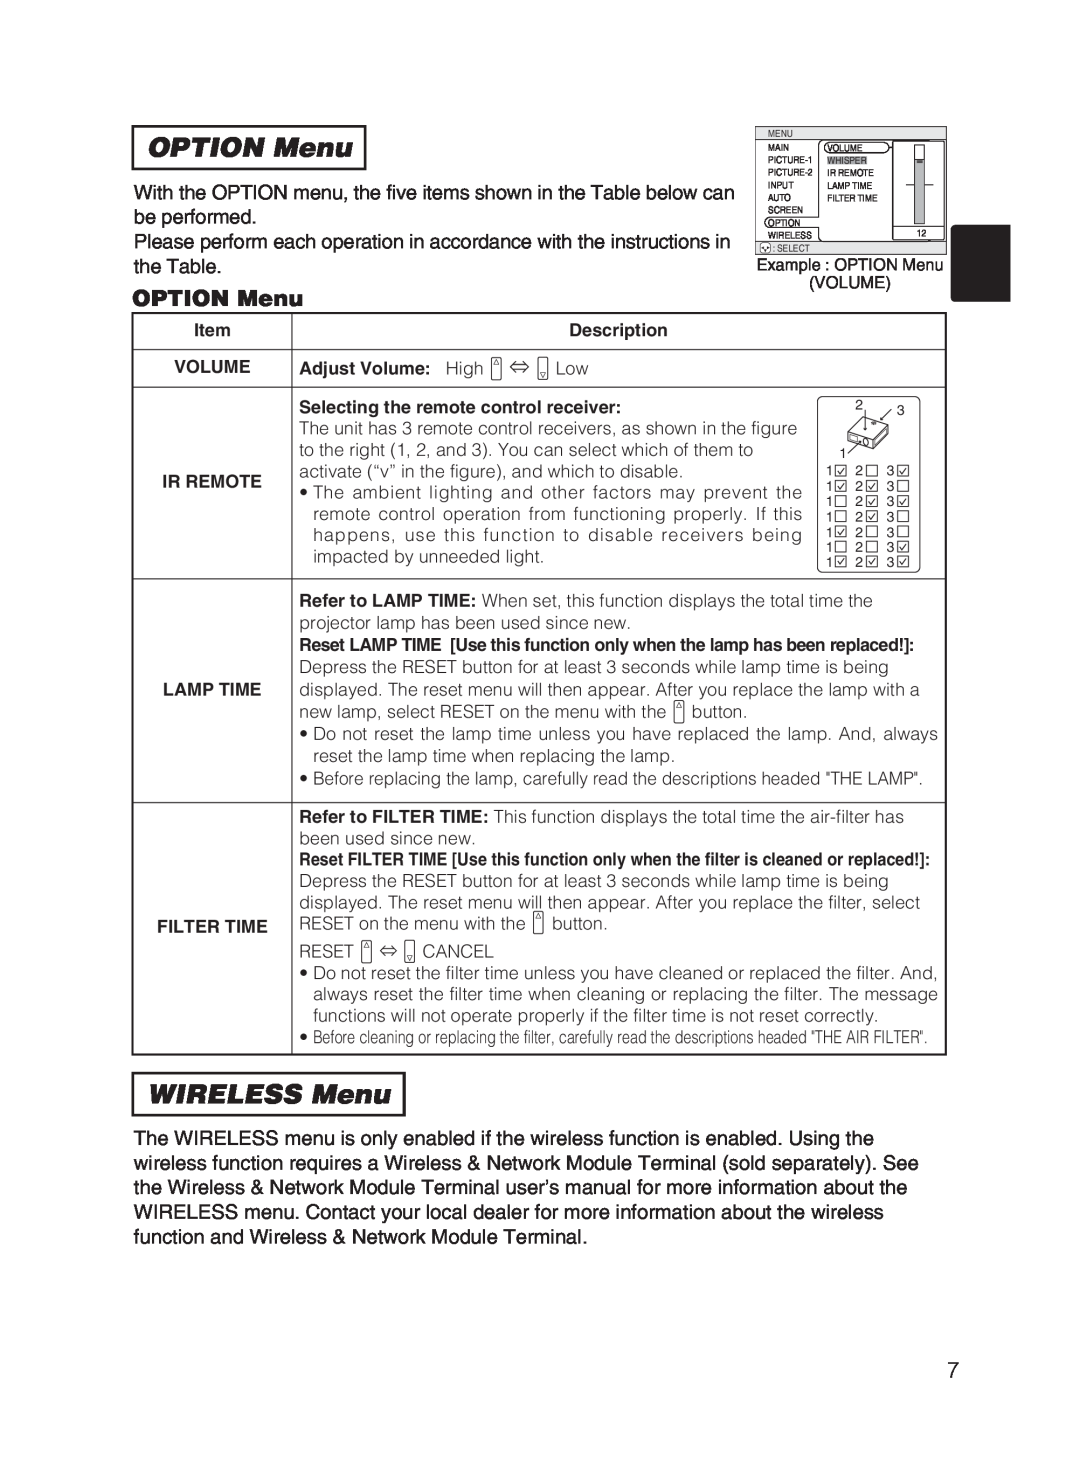 Hitachi CP-X870 user manual OPTION Menu, WIRELESS Menu 